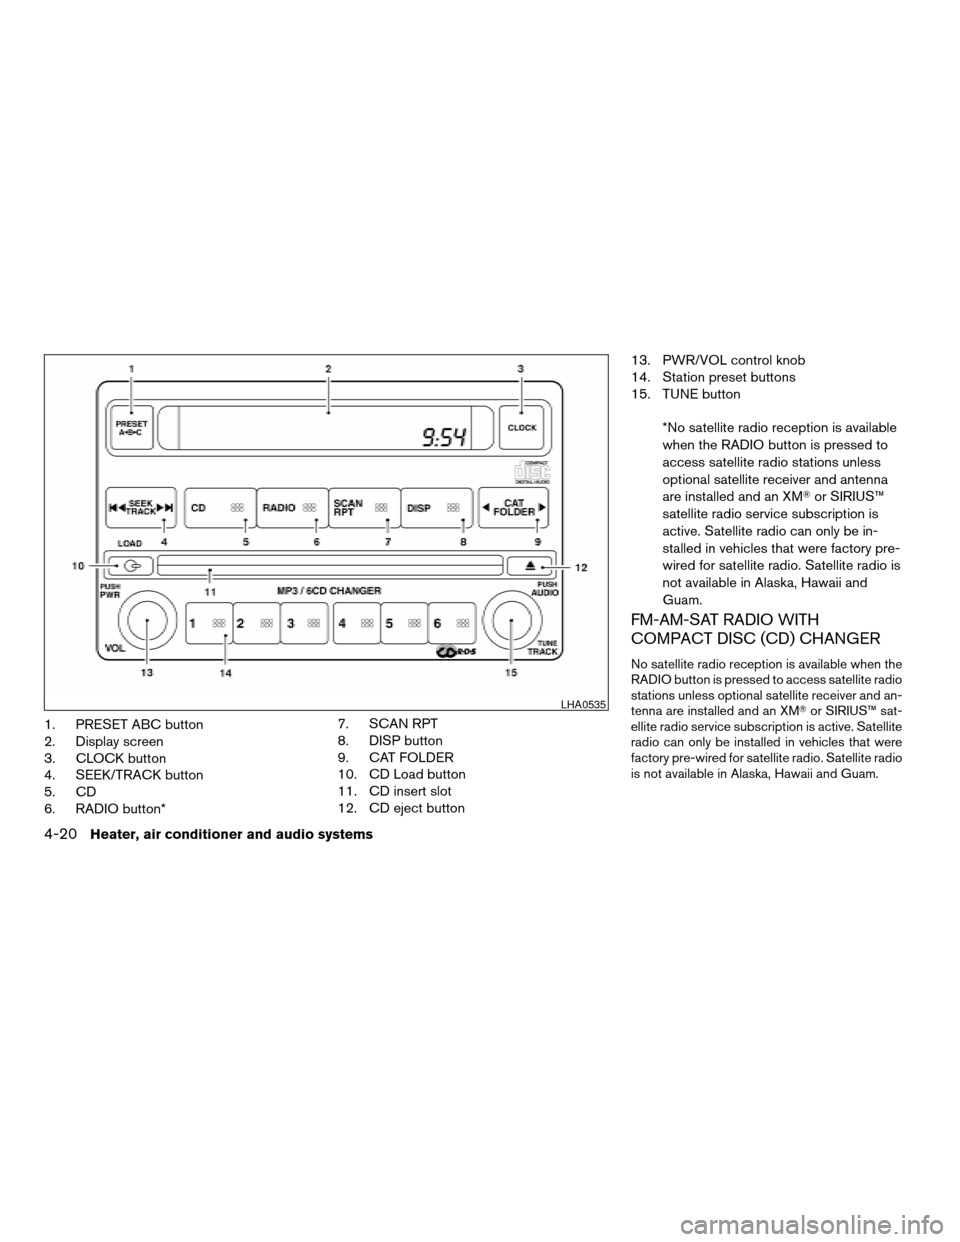 NISSAN XTERRA 2006 N50 / 2.G Owners Manual 1. PRESET ABC button
2. Display screen
3. CLOCK button
4. SEEK/TRACK button
5. CD
6. RADIO button*7. SCAN RPT
8. DISP button
9. CAT FOLDER
10. CD Load button
11. CD insert slot
12. CD eject button13. 